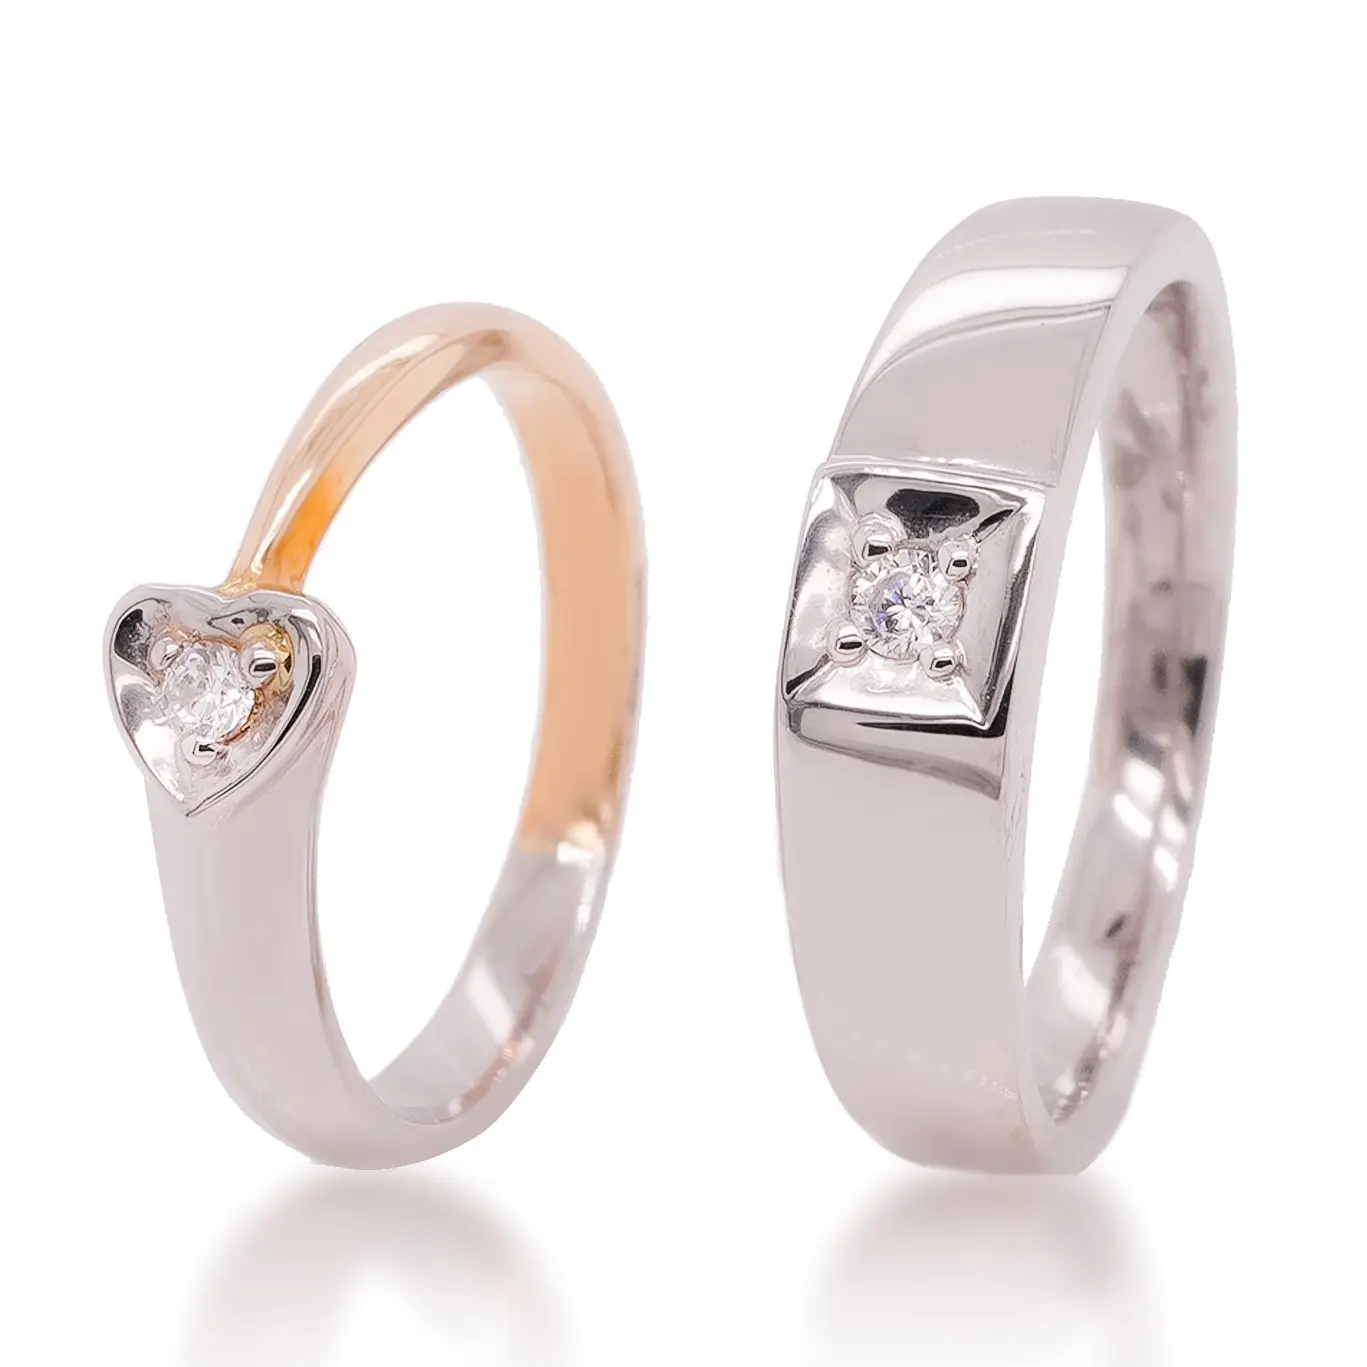 Cubic Zirconia Bezel Setting Wedding Bands Diamond Stone Jewelry 18K Gold Rings With Round Brilliant Cut Diamond For Anniversary